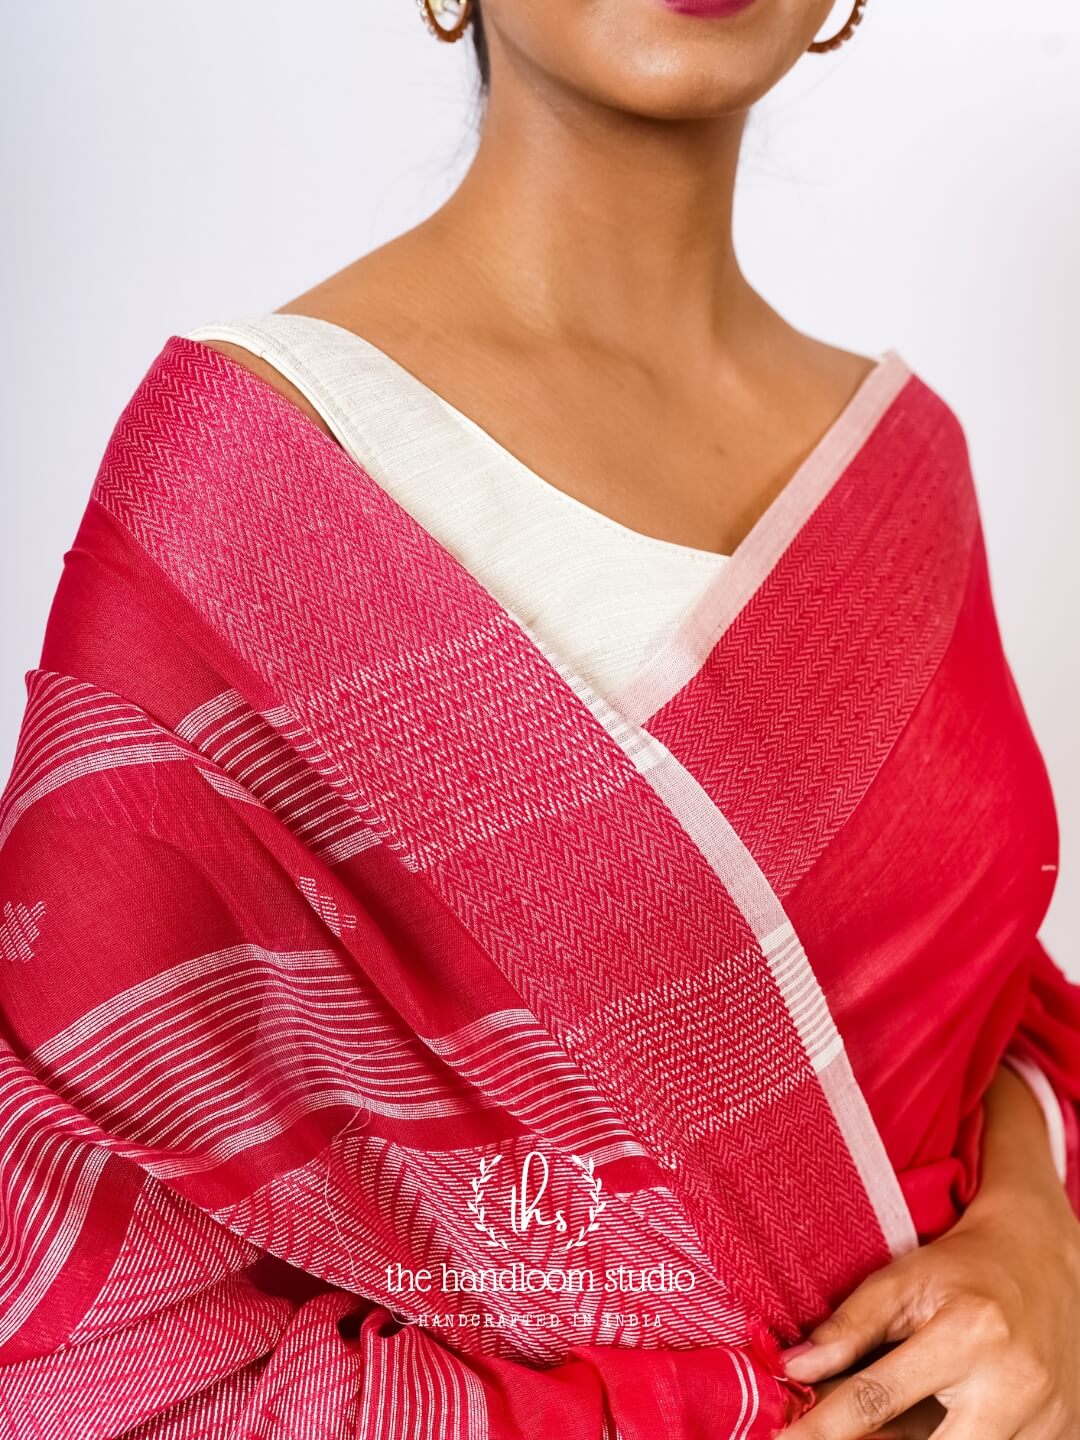 Red cotton handloom jamdani saree